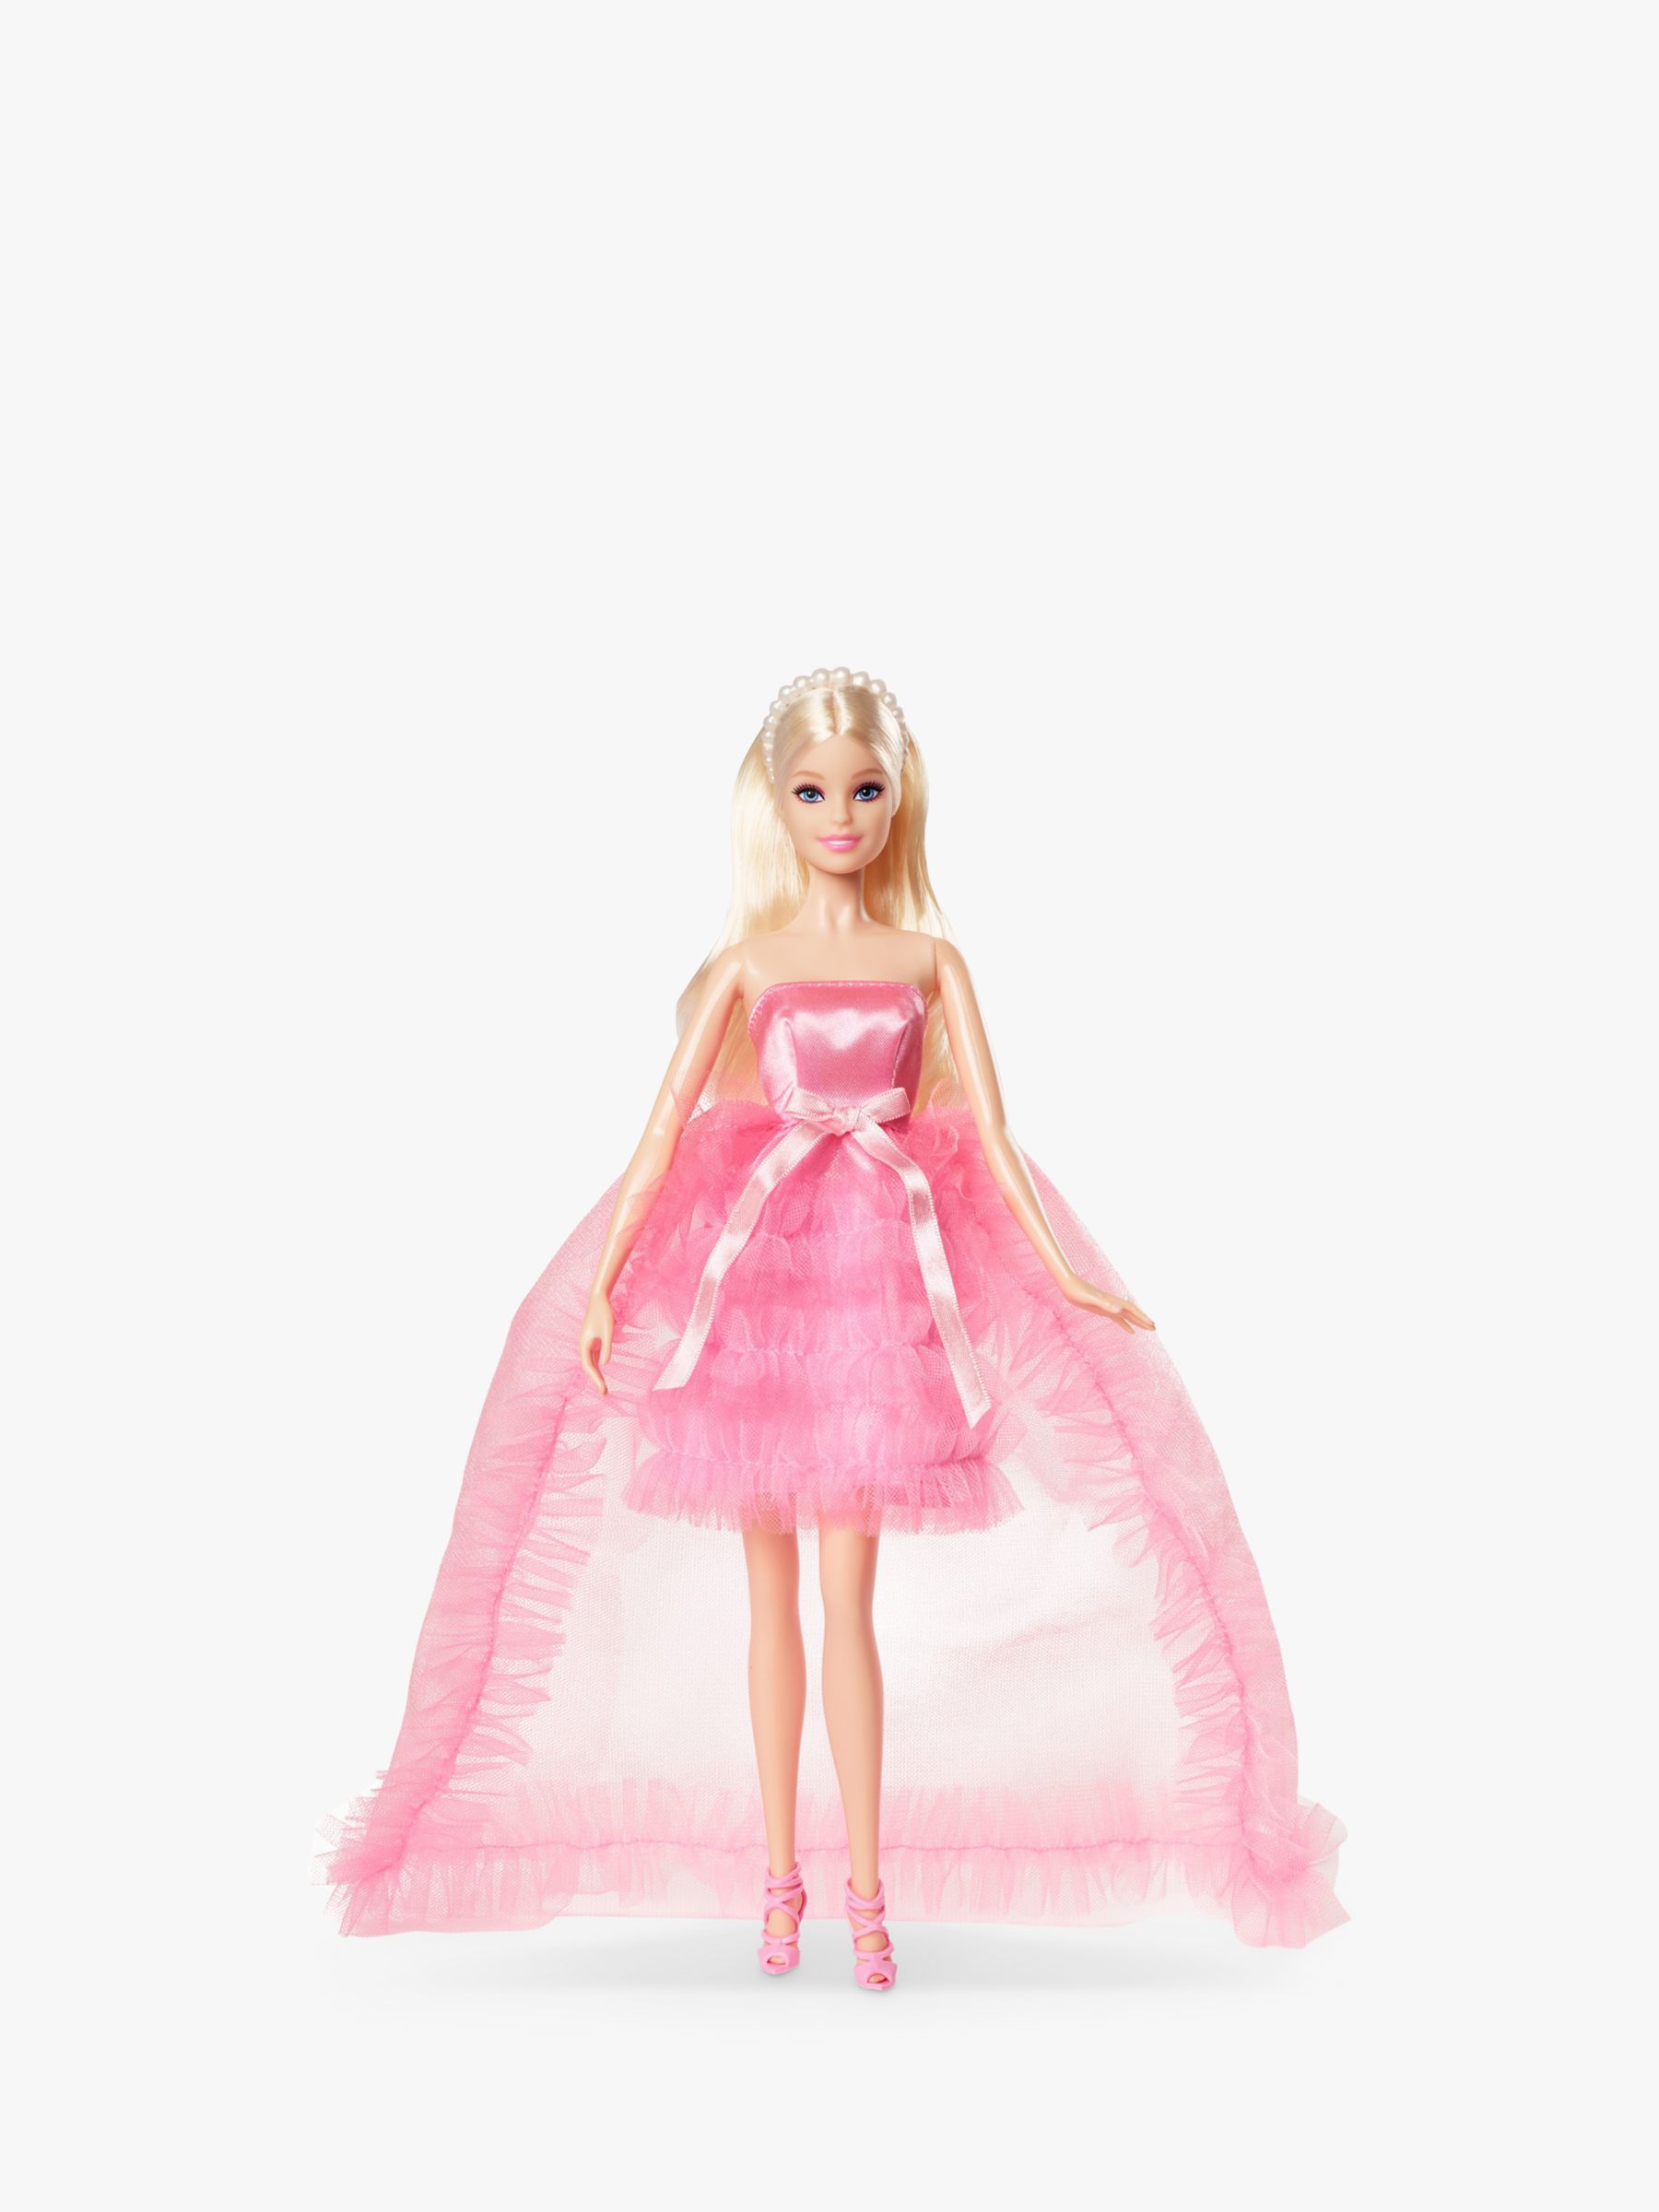 Barbie Let It Shine 16 Inch Backpack